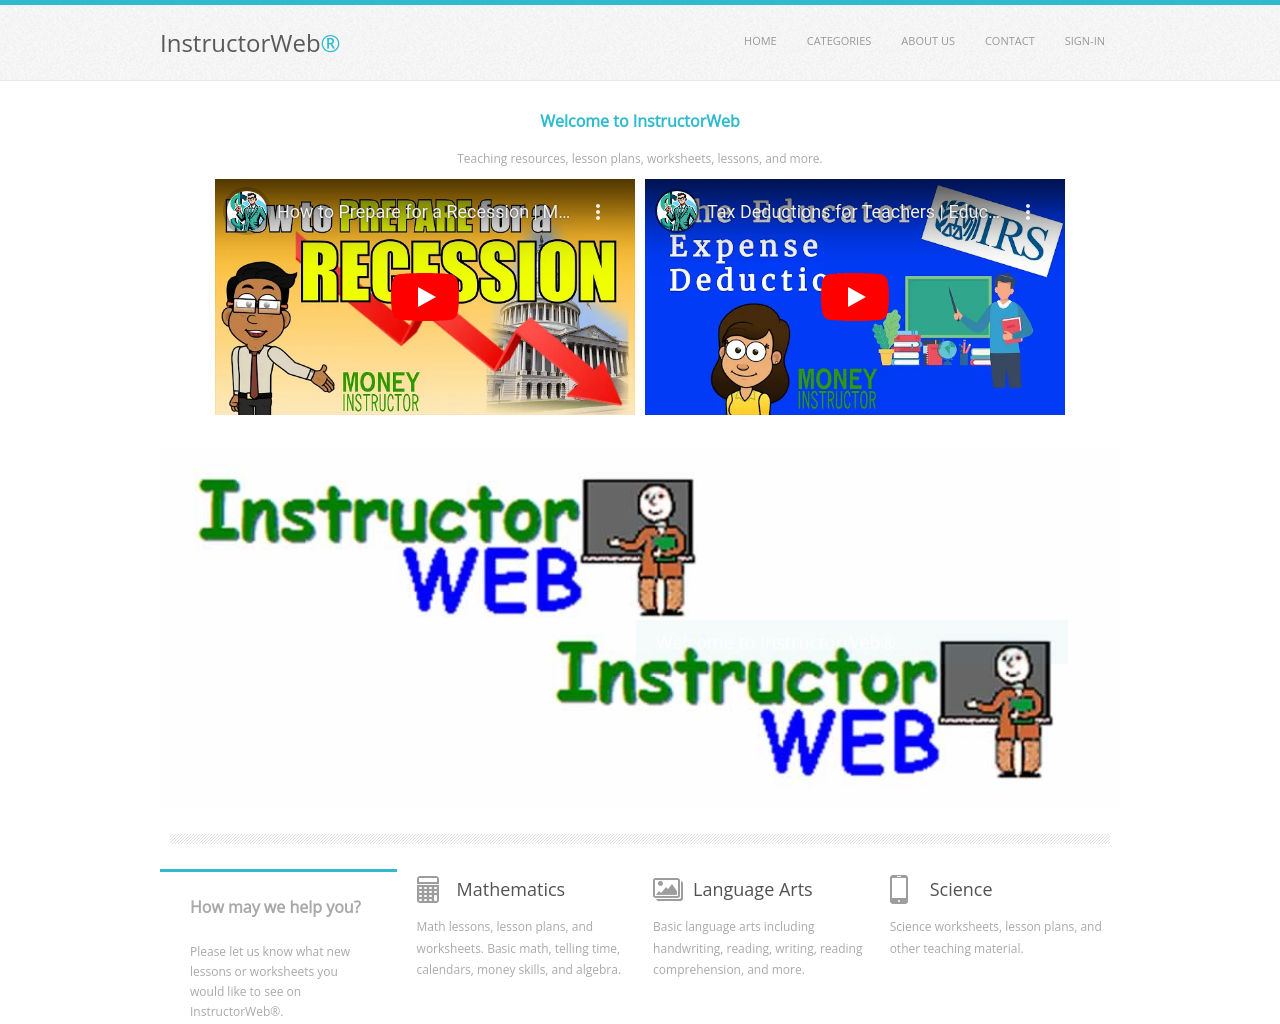 instructorweb.com